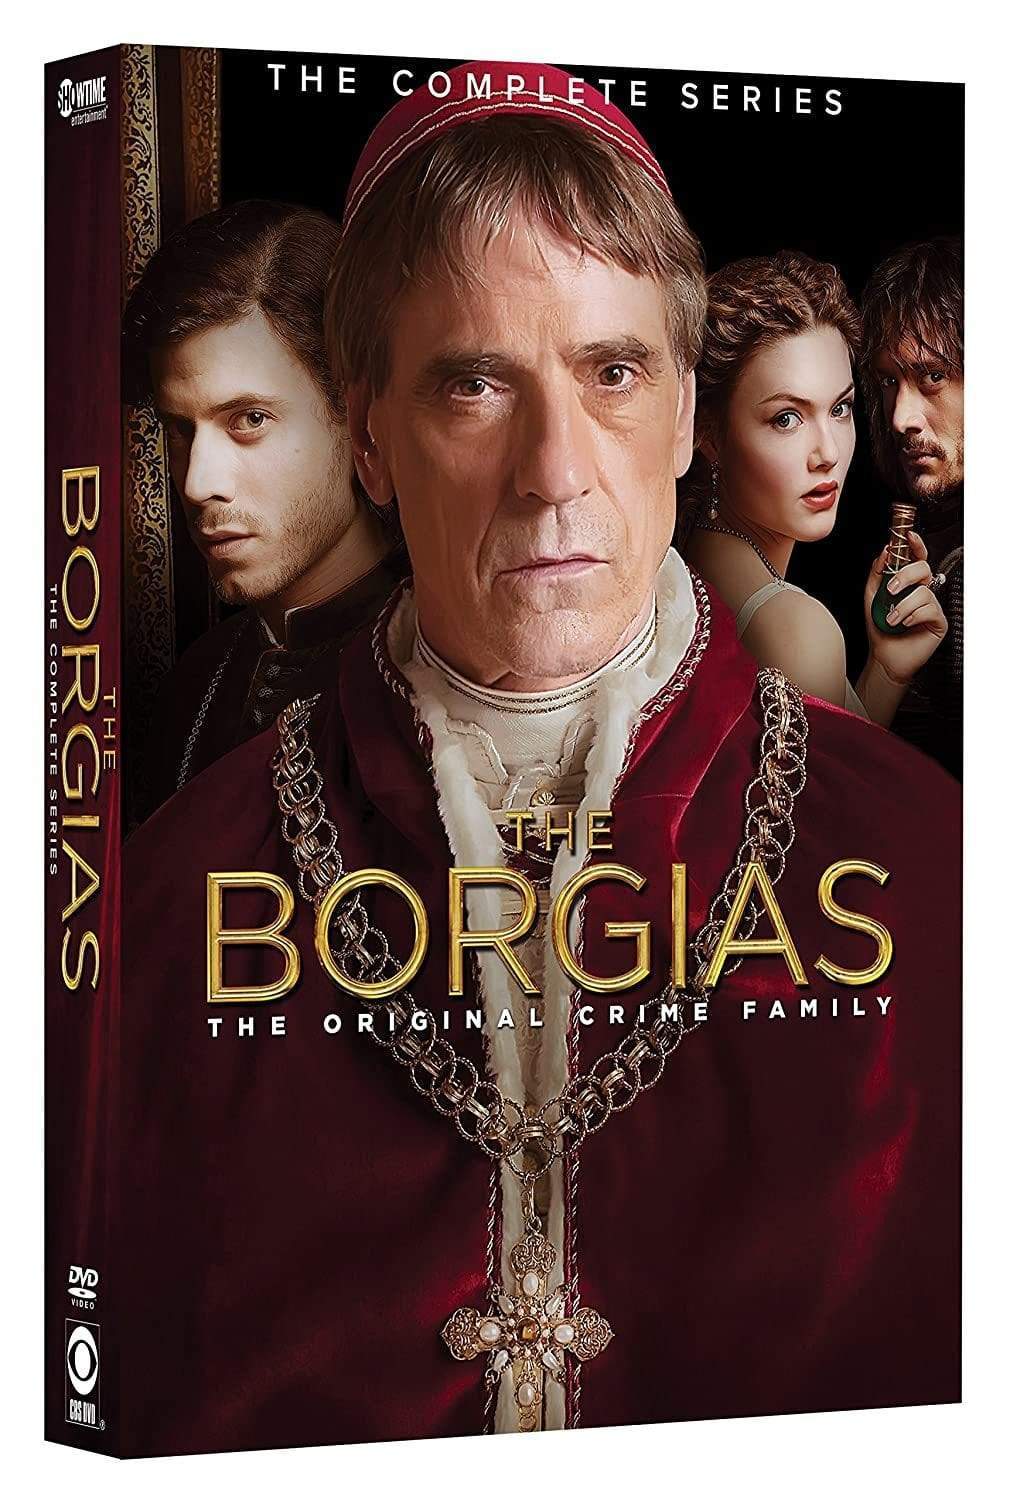 Borgias Complete Series On DVD Paramount Home Entertainment DVDs & Blu-ray Discs